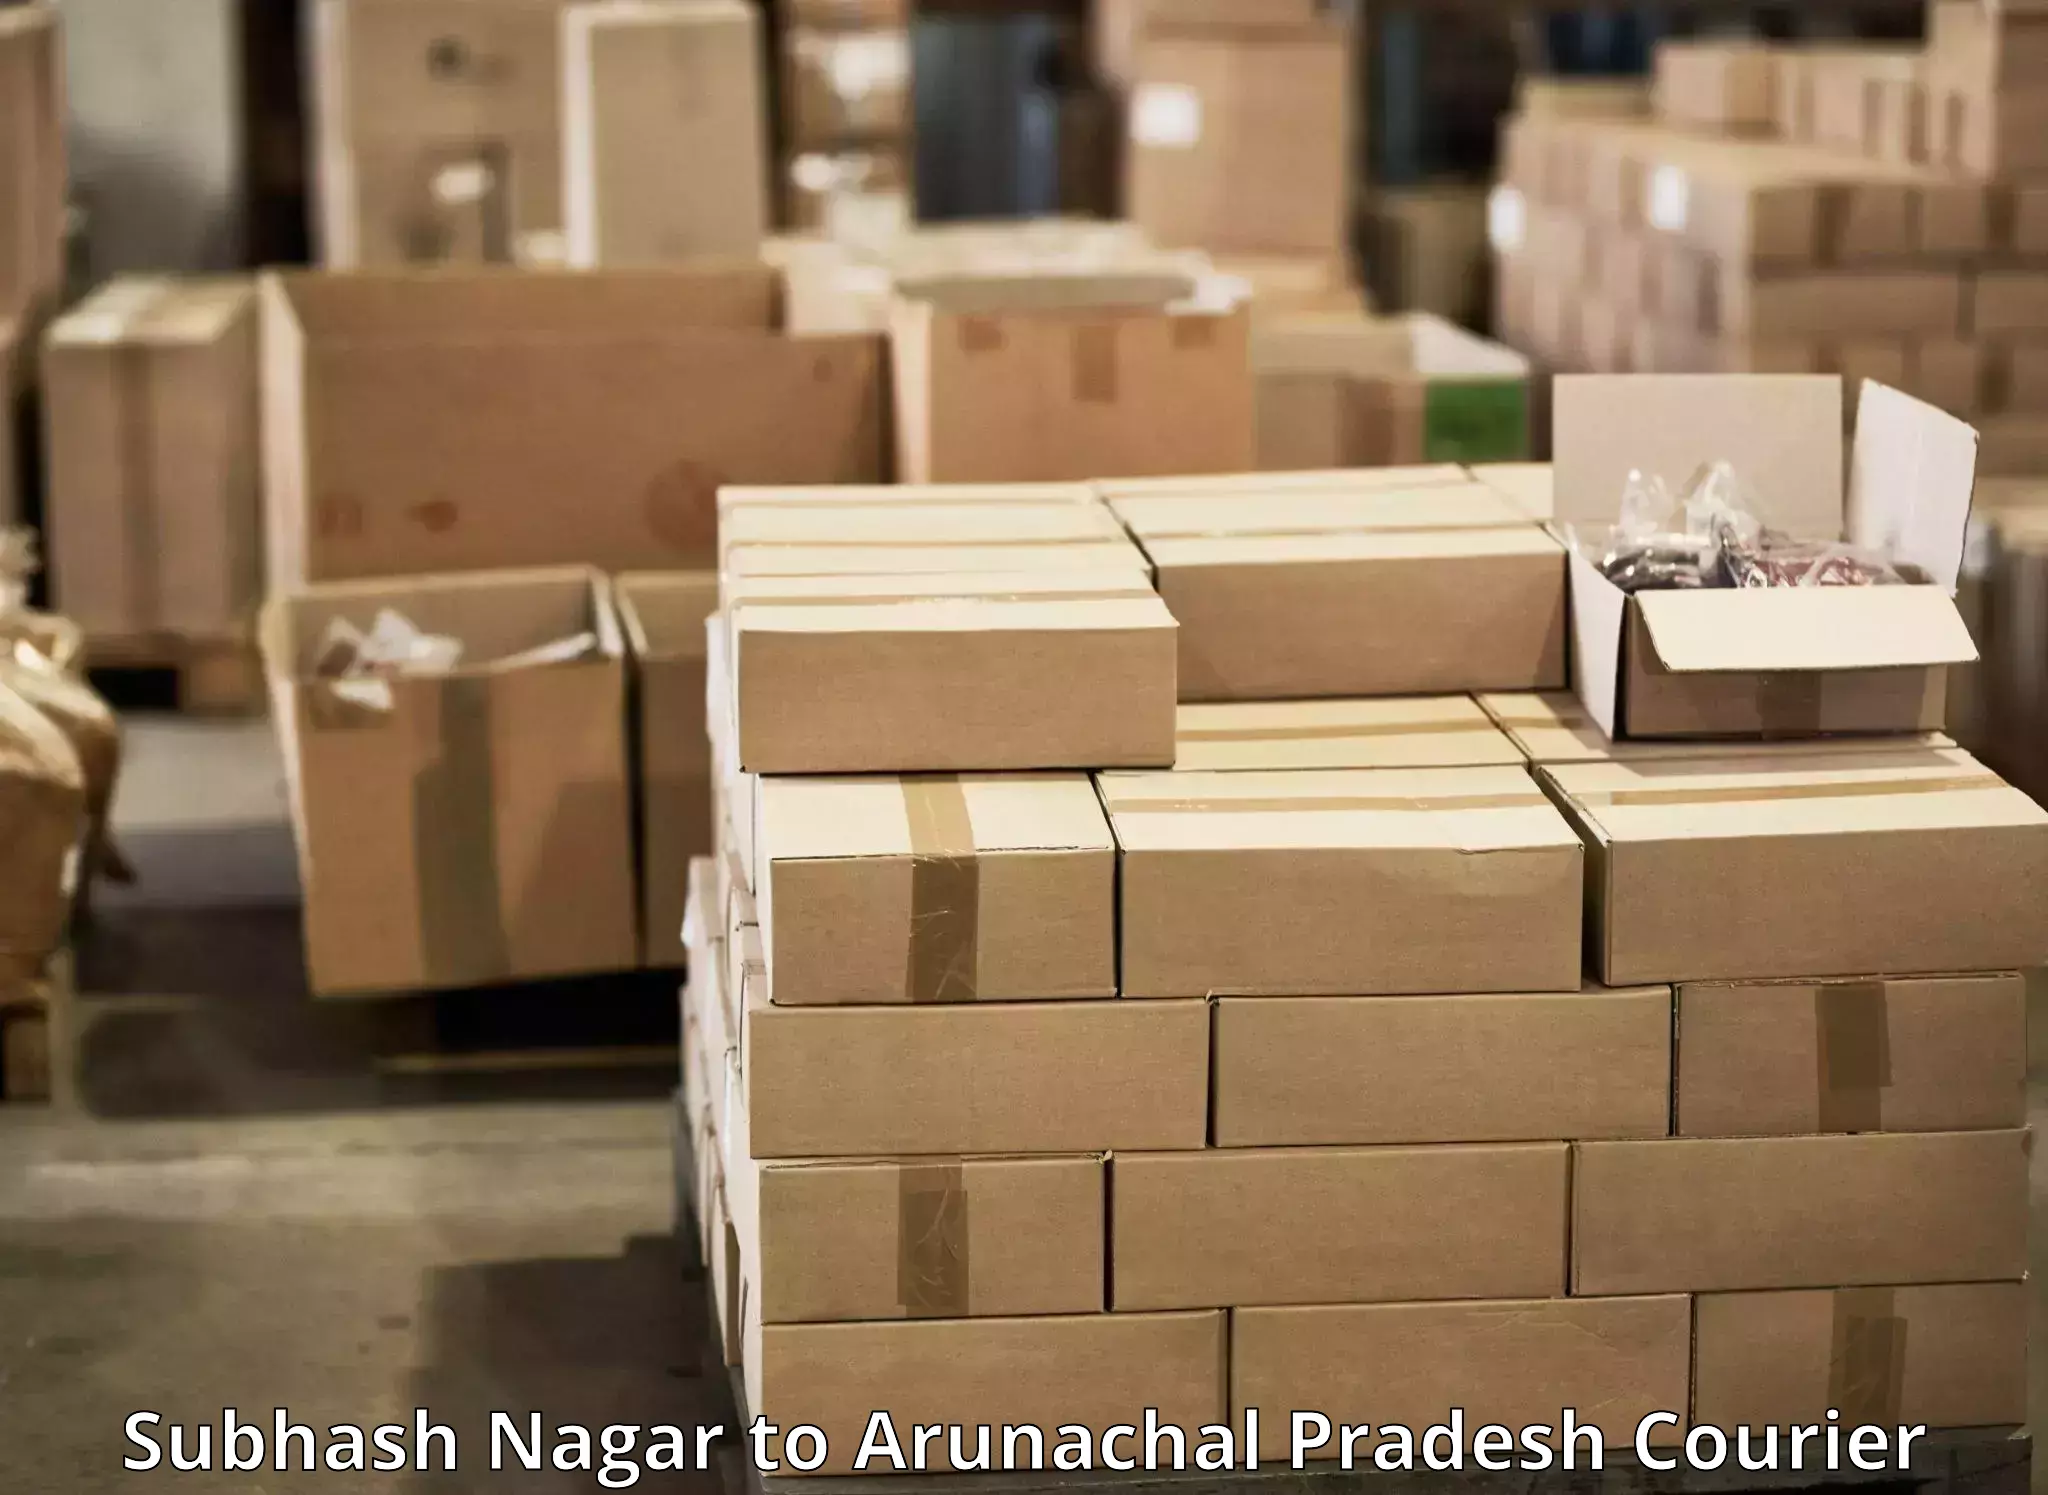 High-performance logistics Subhash Nagar to Tirap